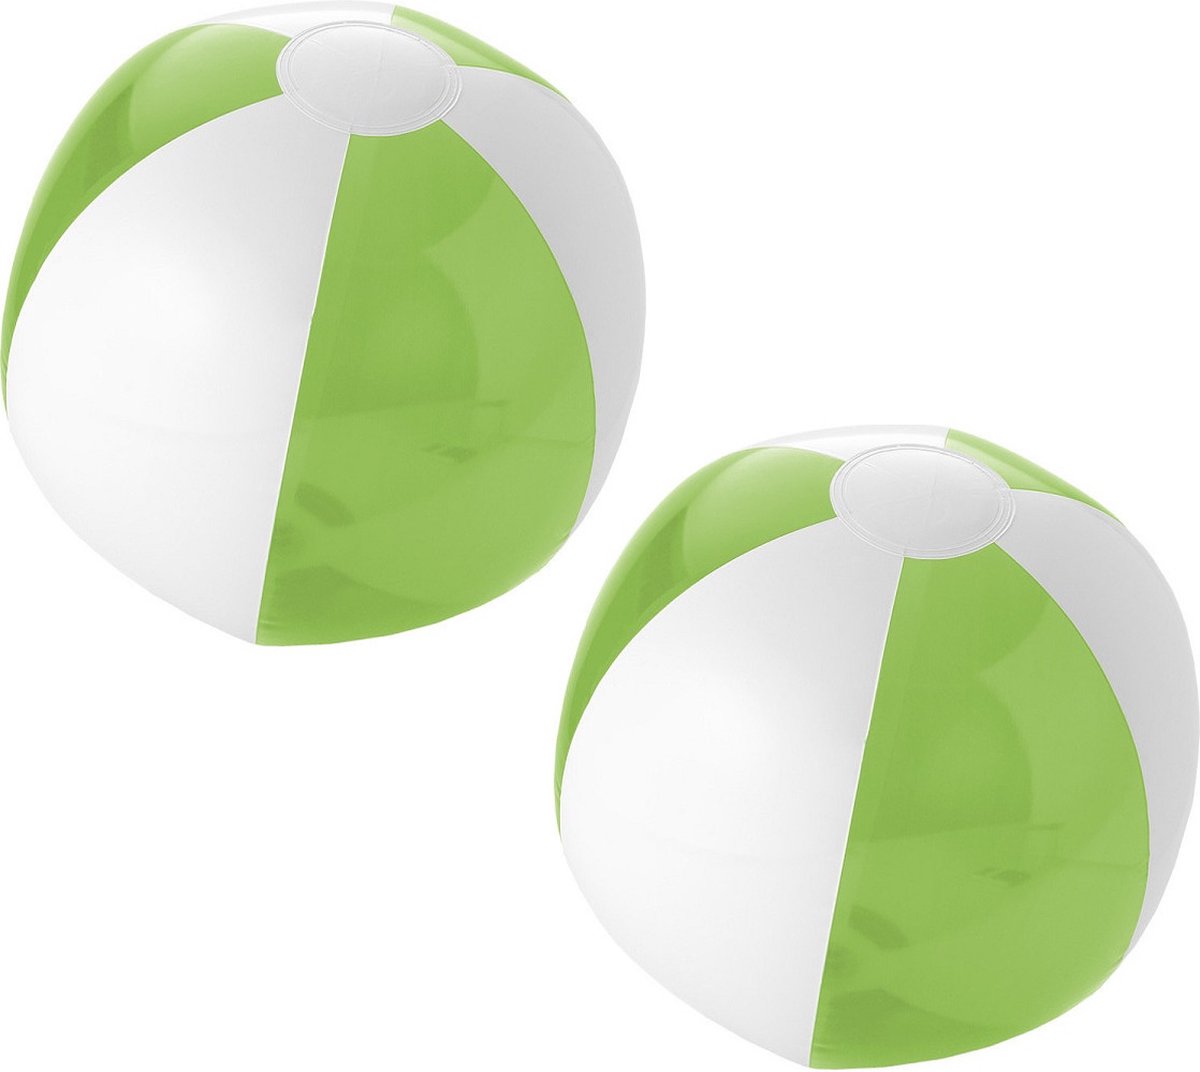 3x stuks opblaasbare strandballen groen/wit 30 cm - Buitenspeelgoed waterspeelgoed opblaasbaar